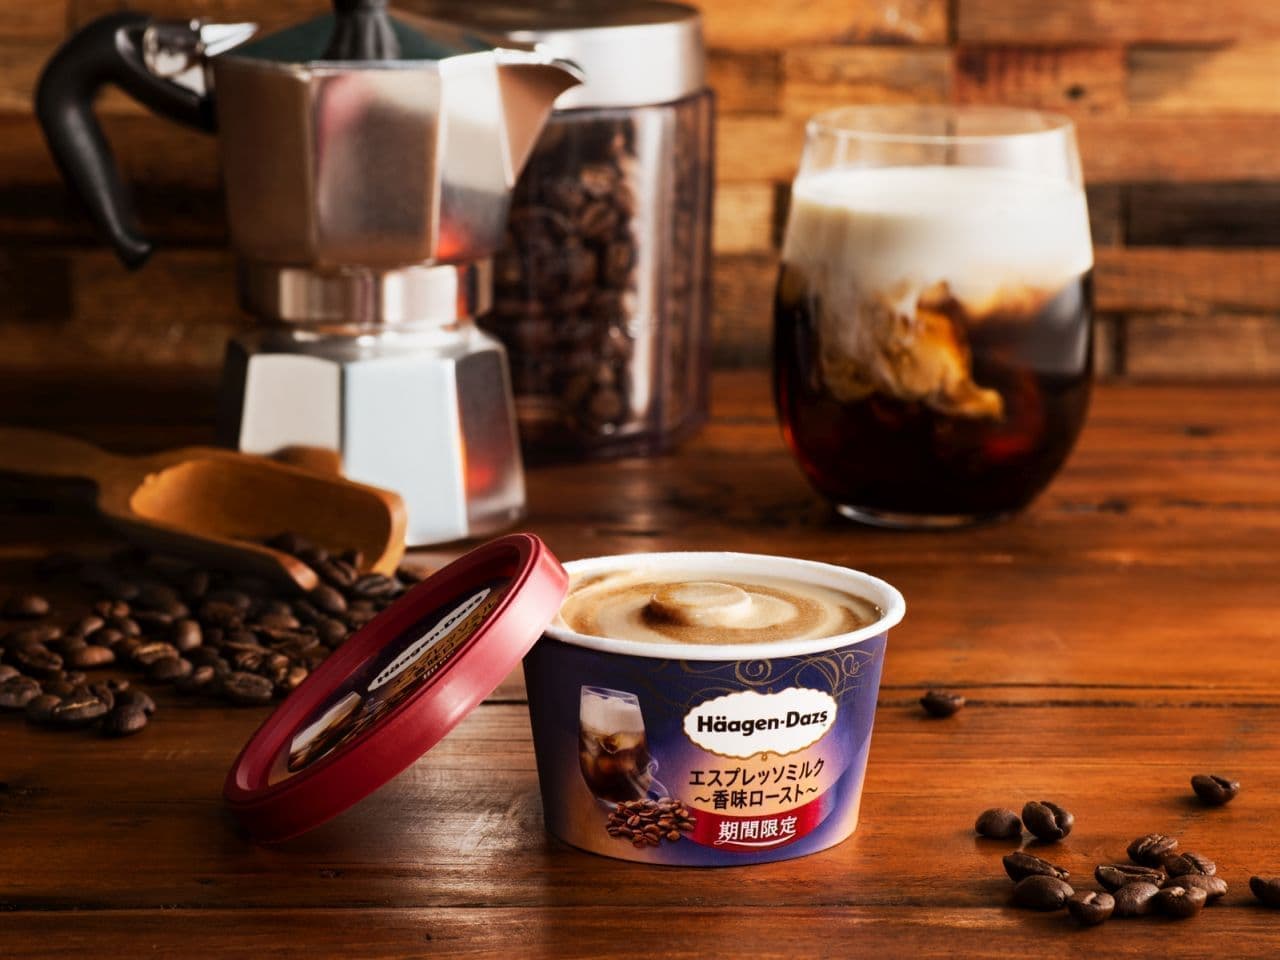 Haagen-Dazs "Espresso Milk-Roasted Flavor-"